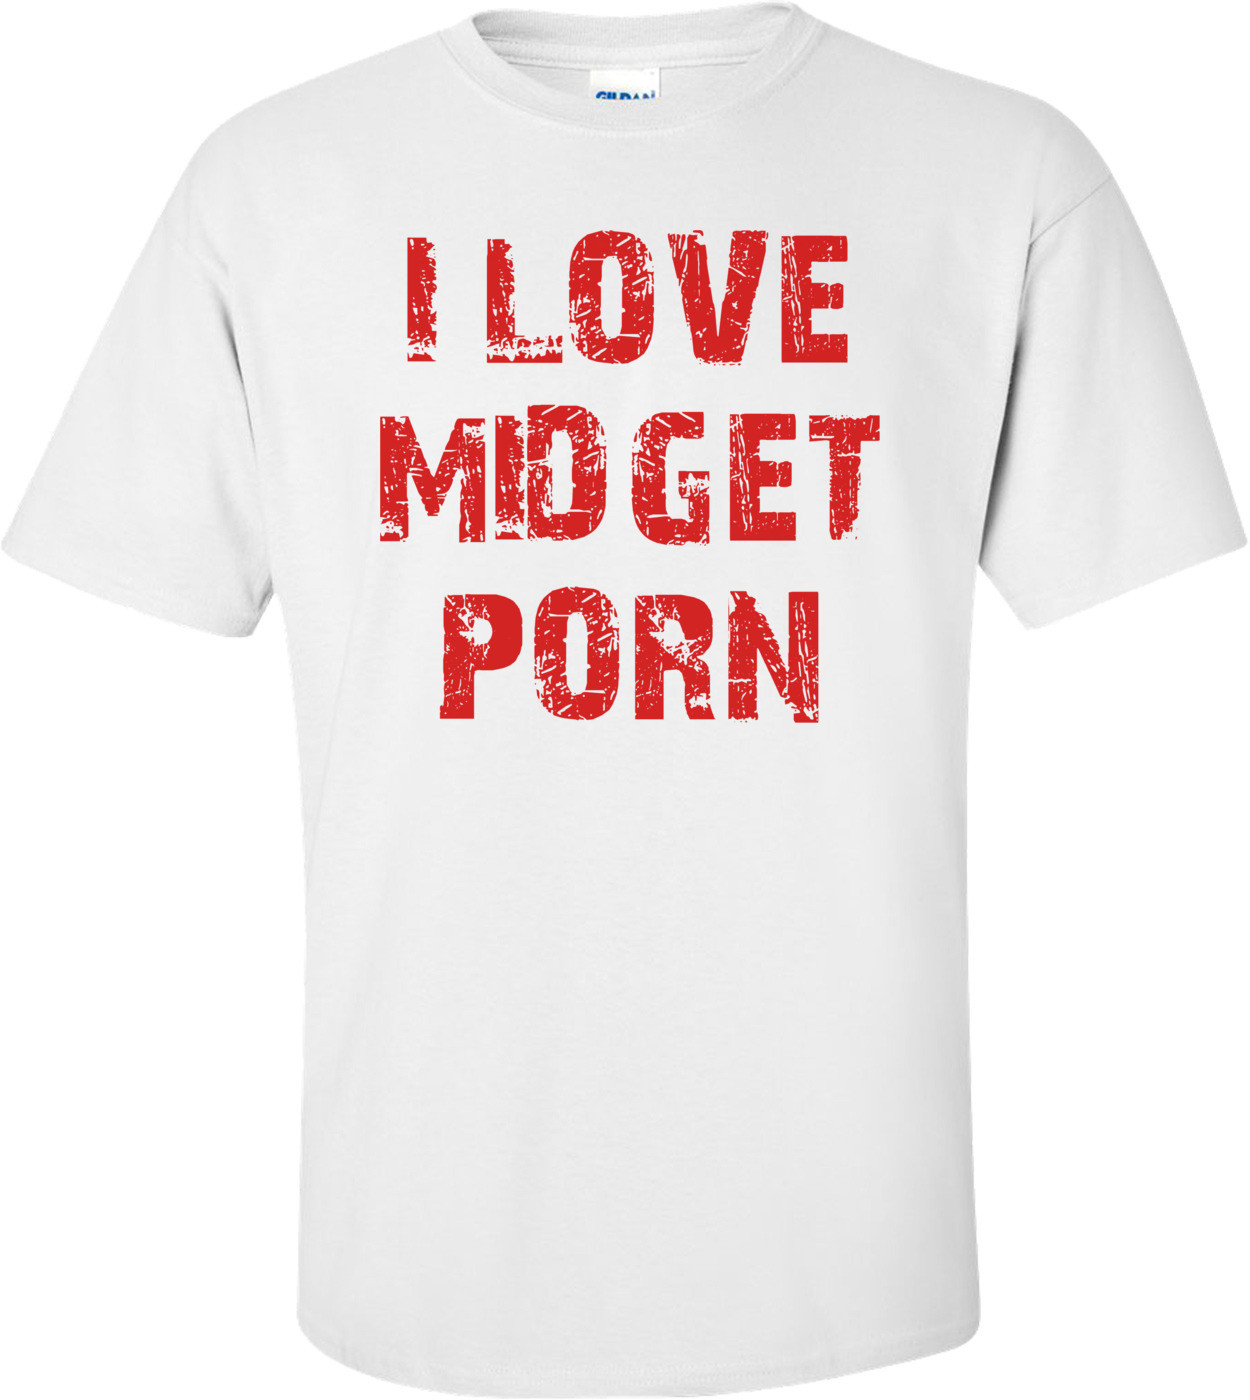 I LOVE MIDGET PORN Shirt